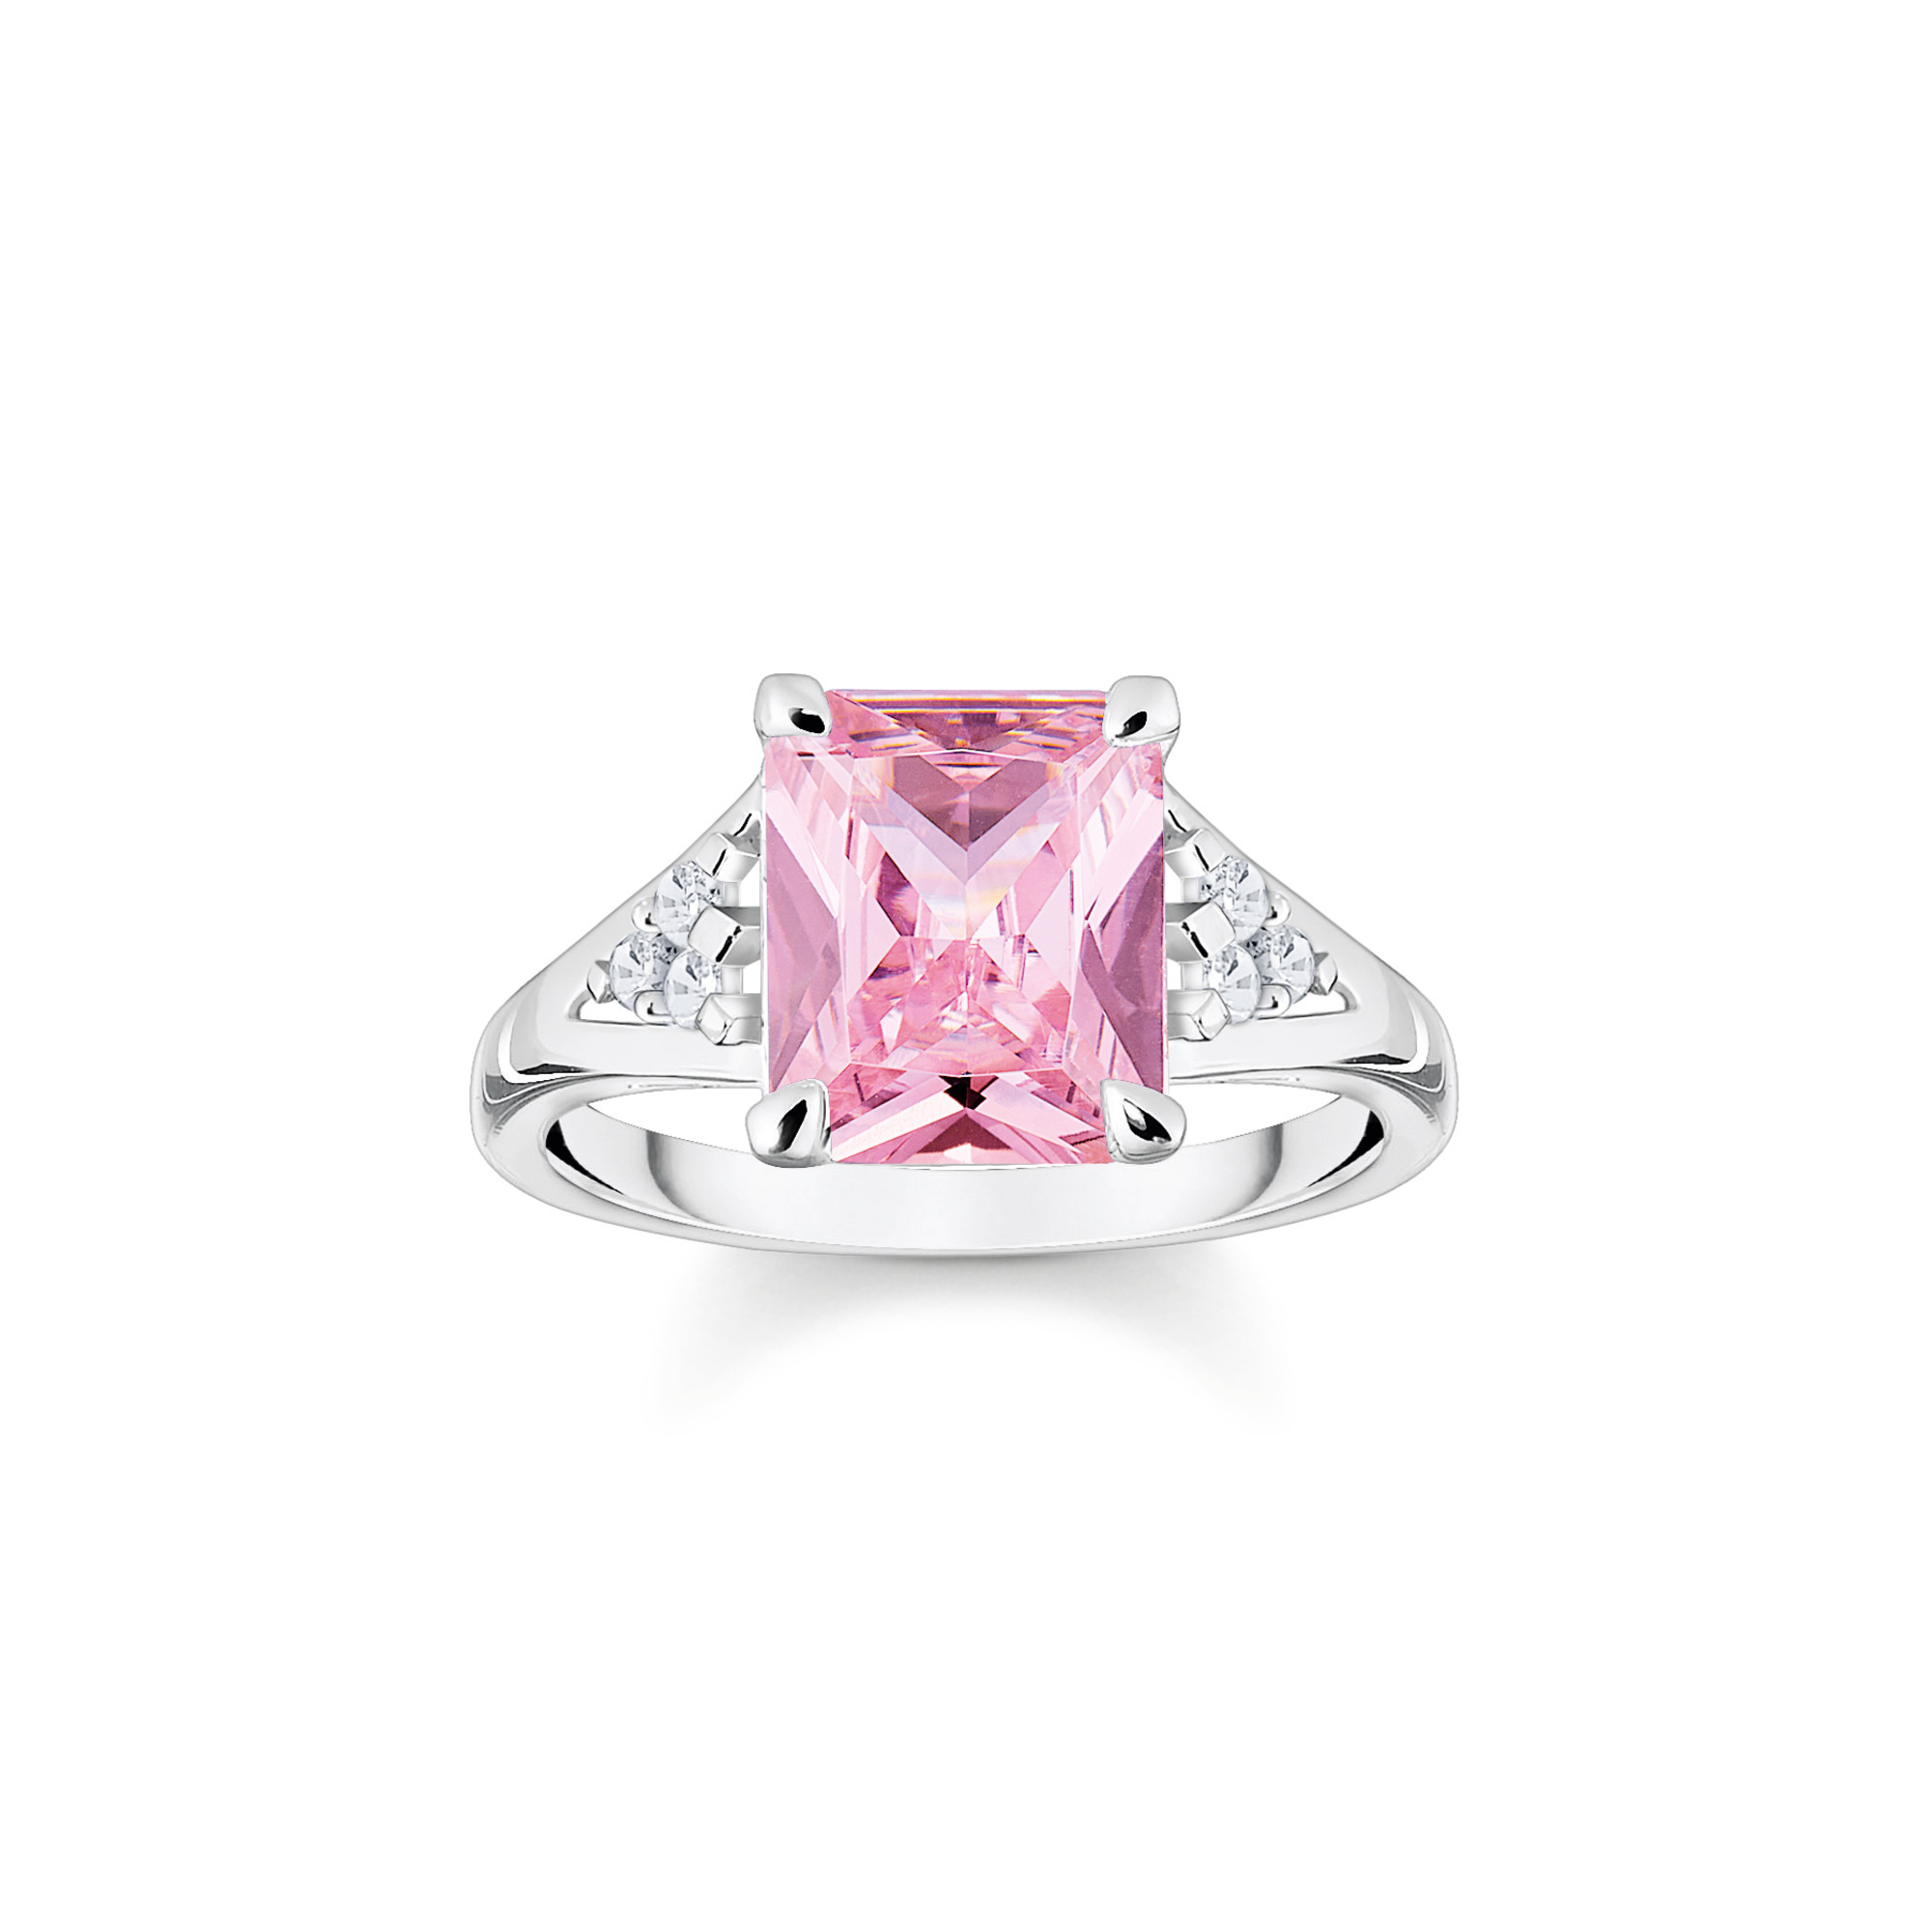 Thomas Sabo Heritage Pink Ring with White Stones - Thomas Sabo, Thomas Sabo  Sterling Silver -  - Fallers Irish Jewelry